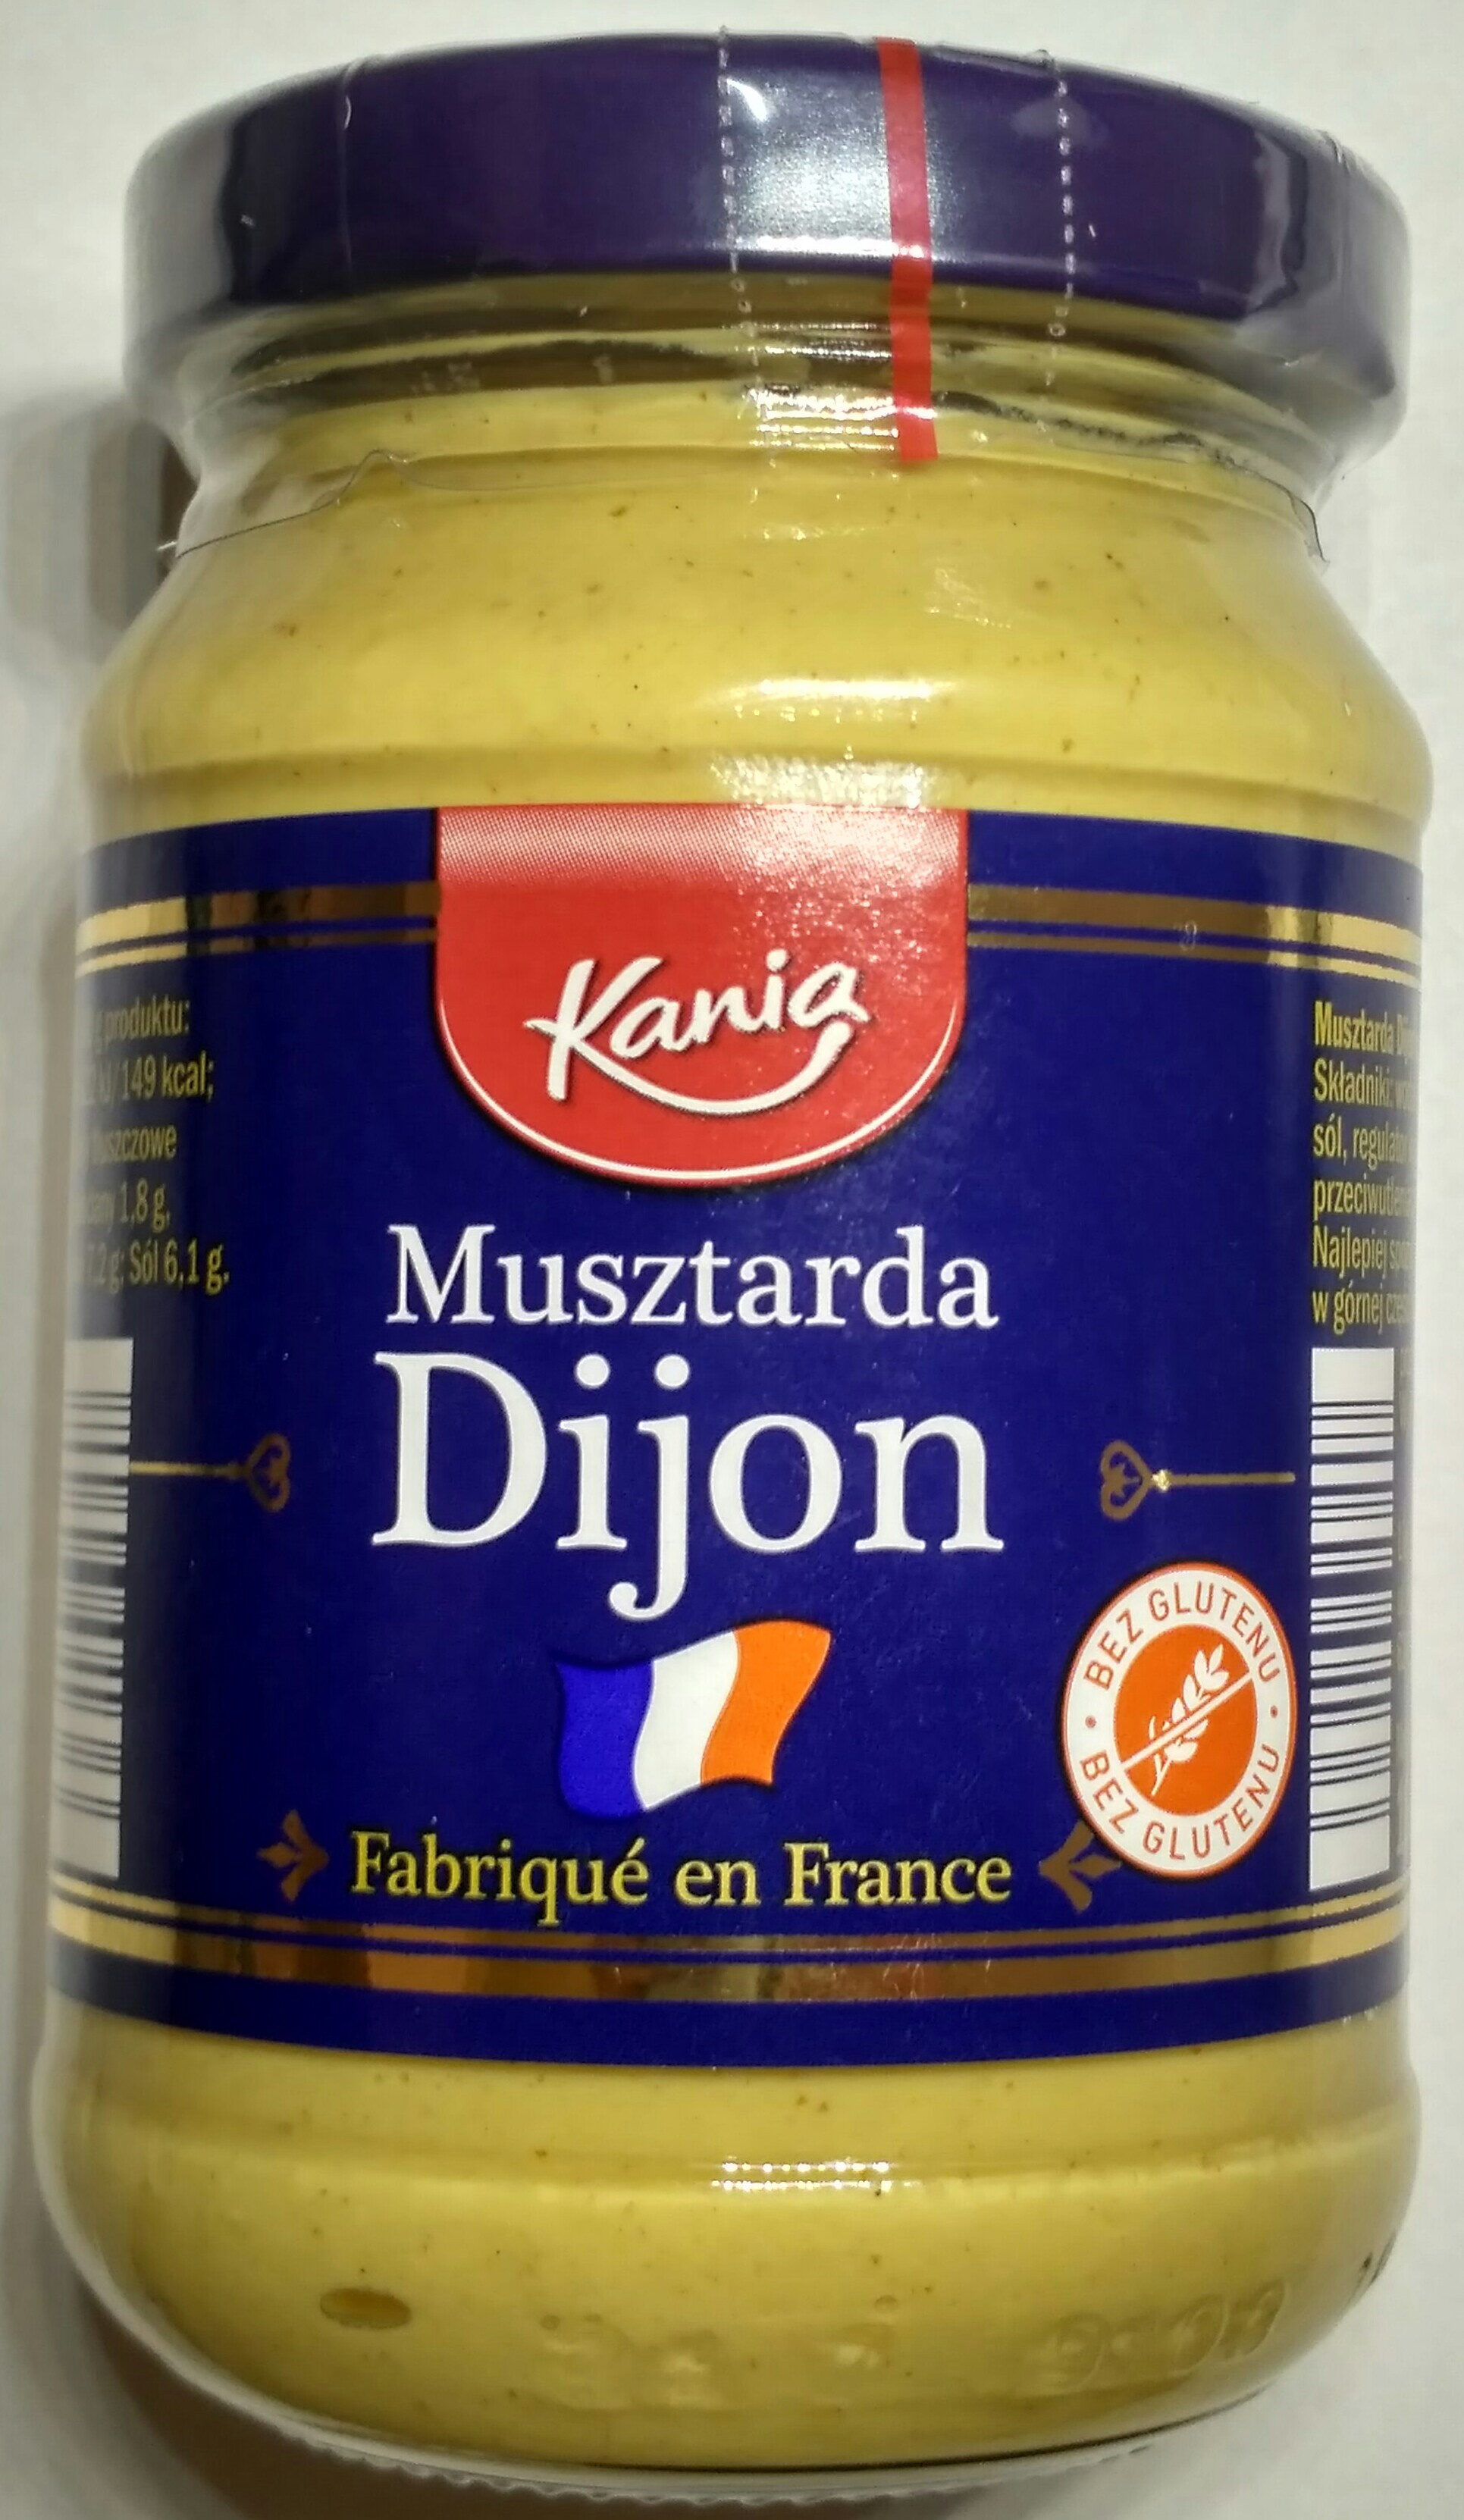 Musztarda Dijon - Product - pl